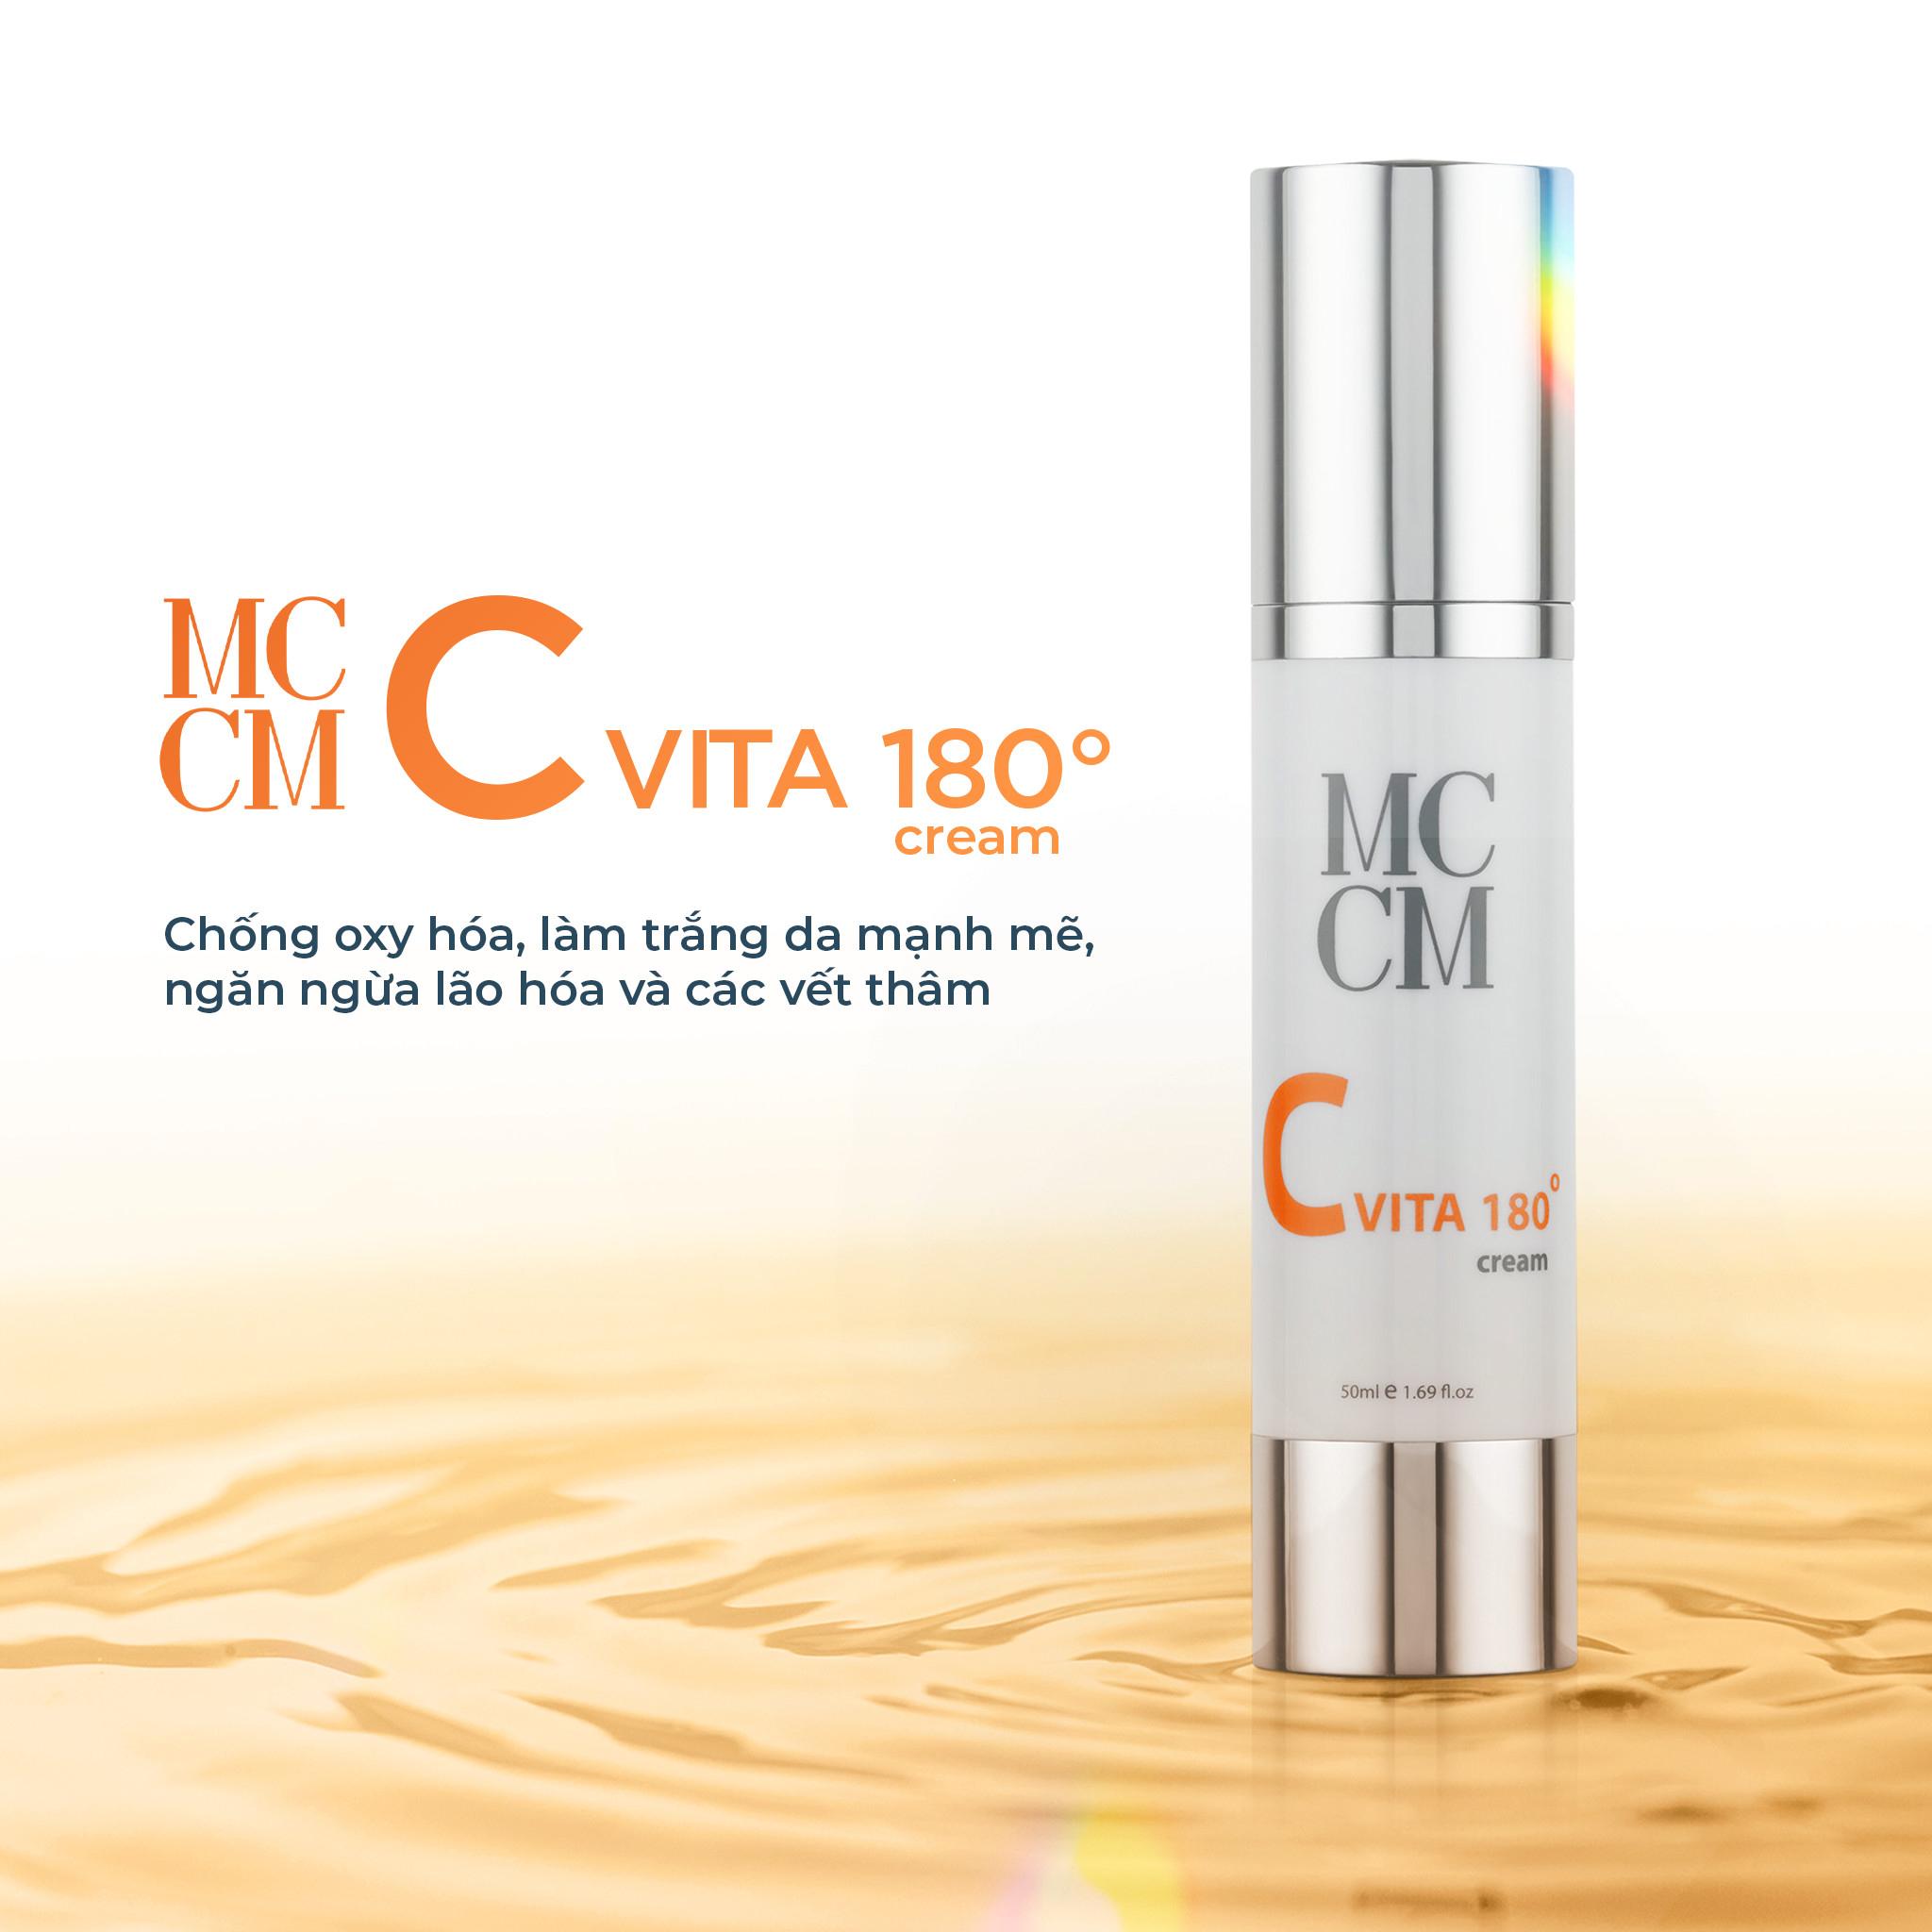 Kem dưỡng trắng da MCCM C Vita 180 Cream